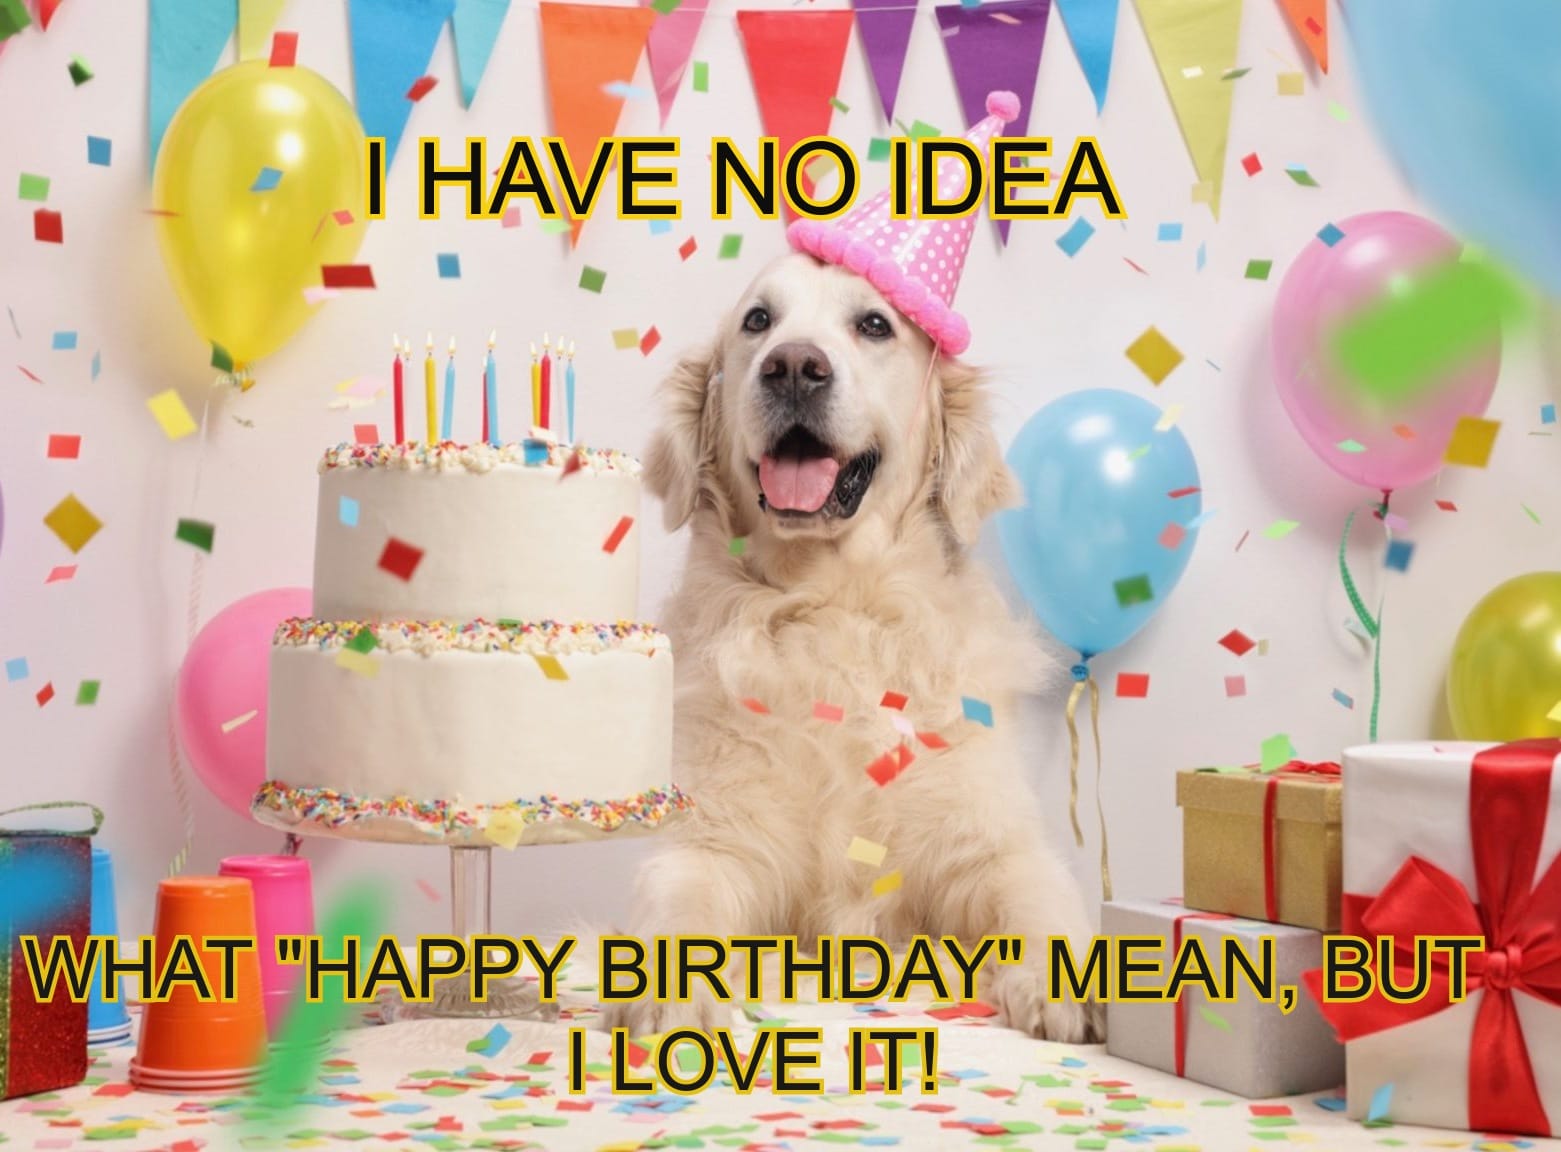 15+ Best Happy Birthday Dog Memes For Your Enjoyment - PetPress